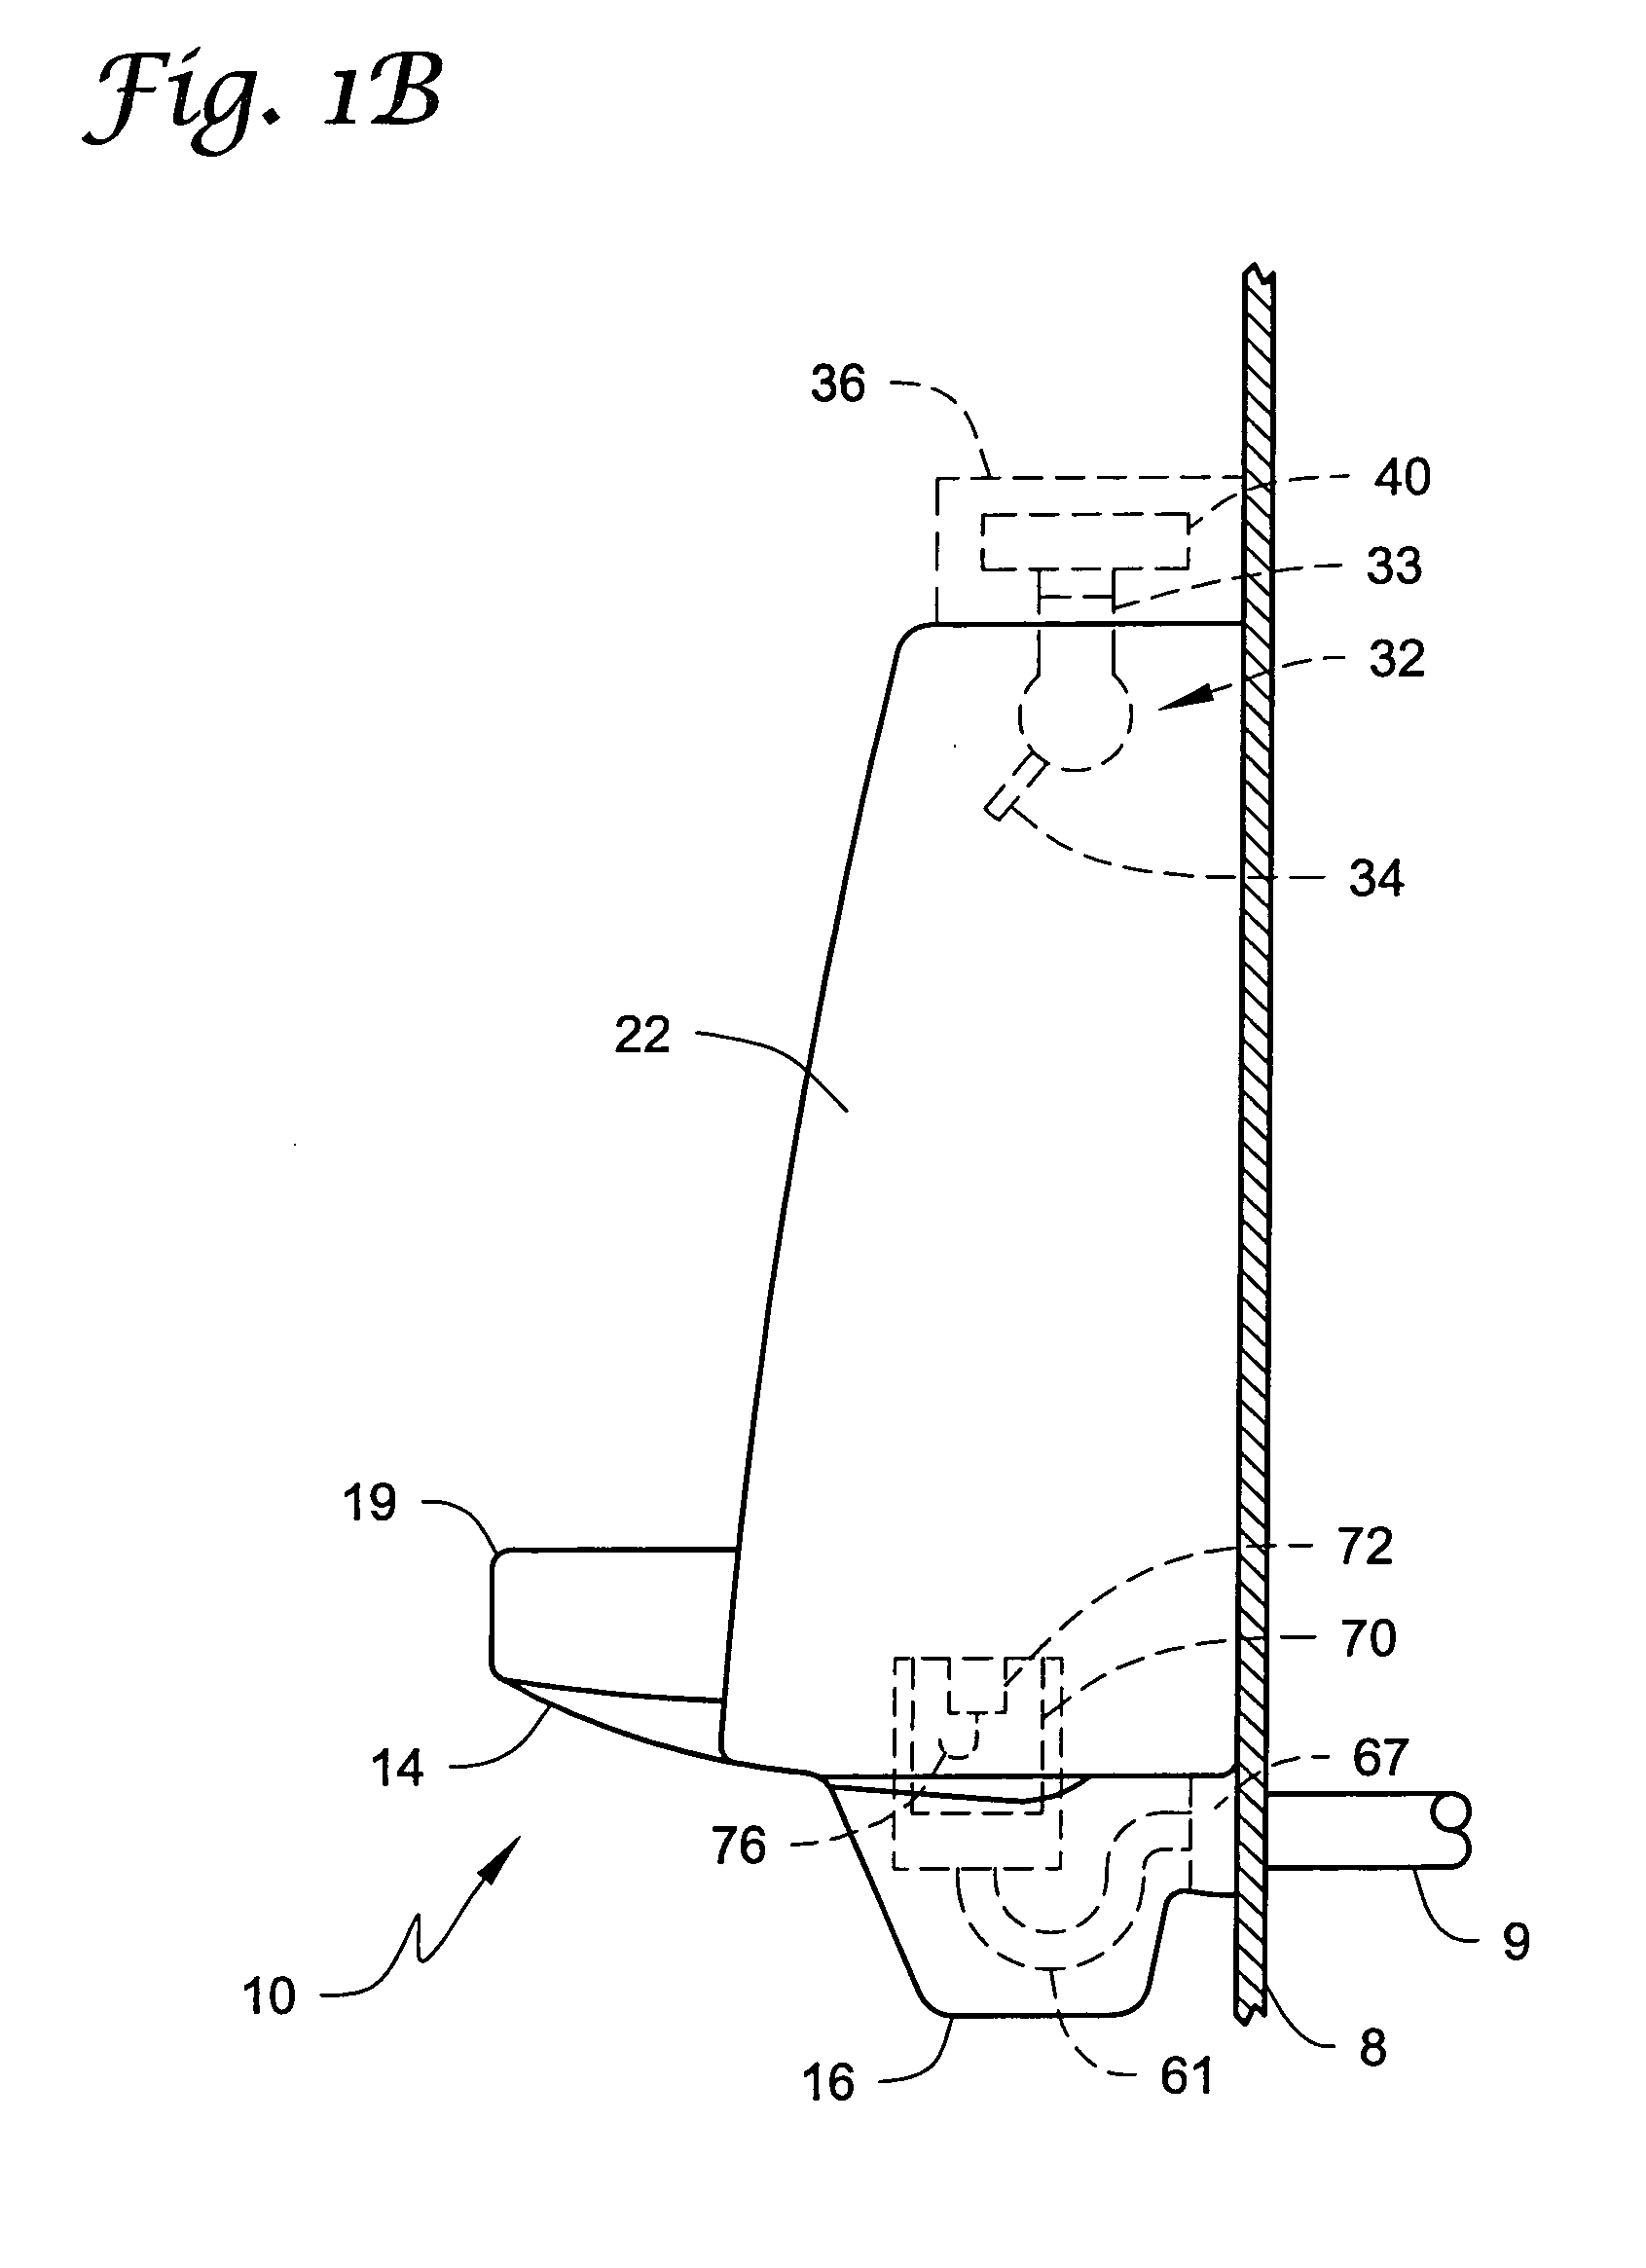 Cartridge apparatus for urinal